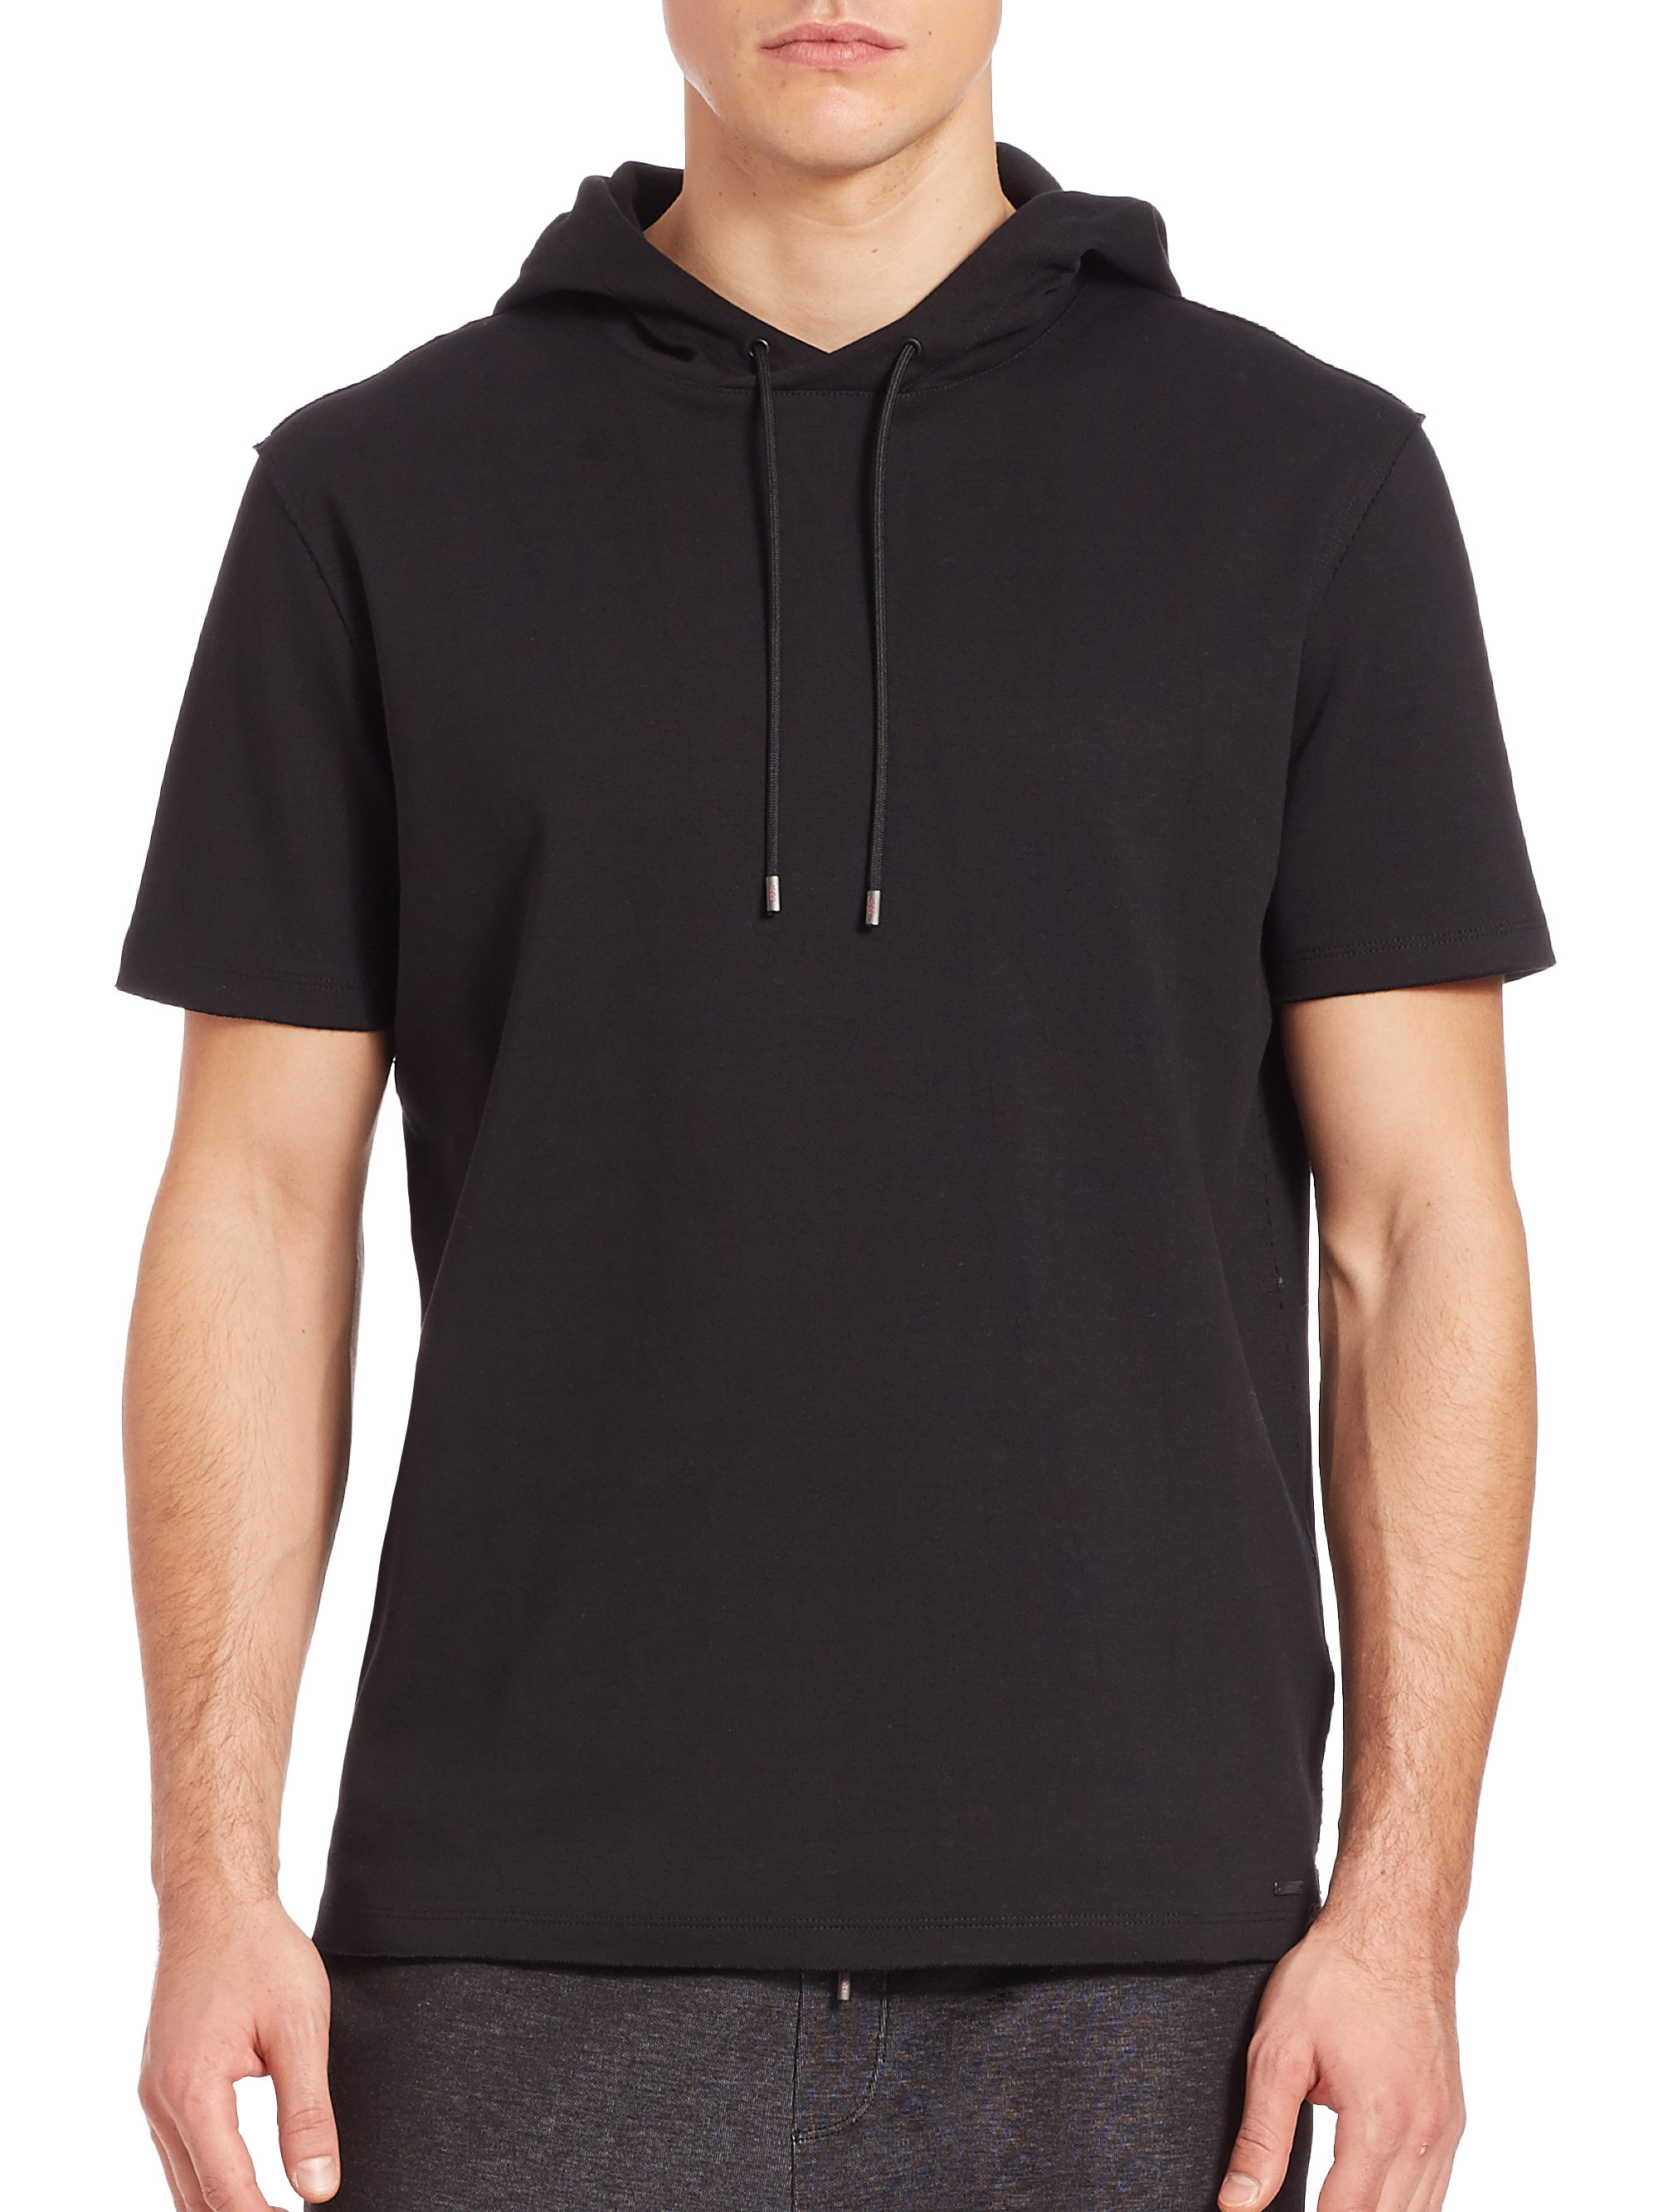 Lyst - Boss Short Sleeve Pullover Hoodie in Black for Men